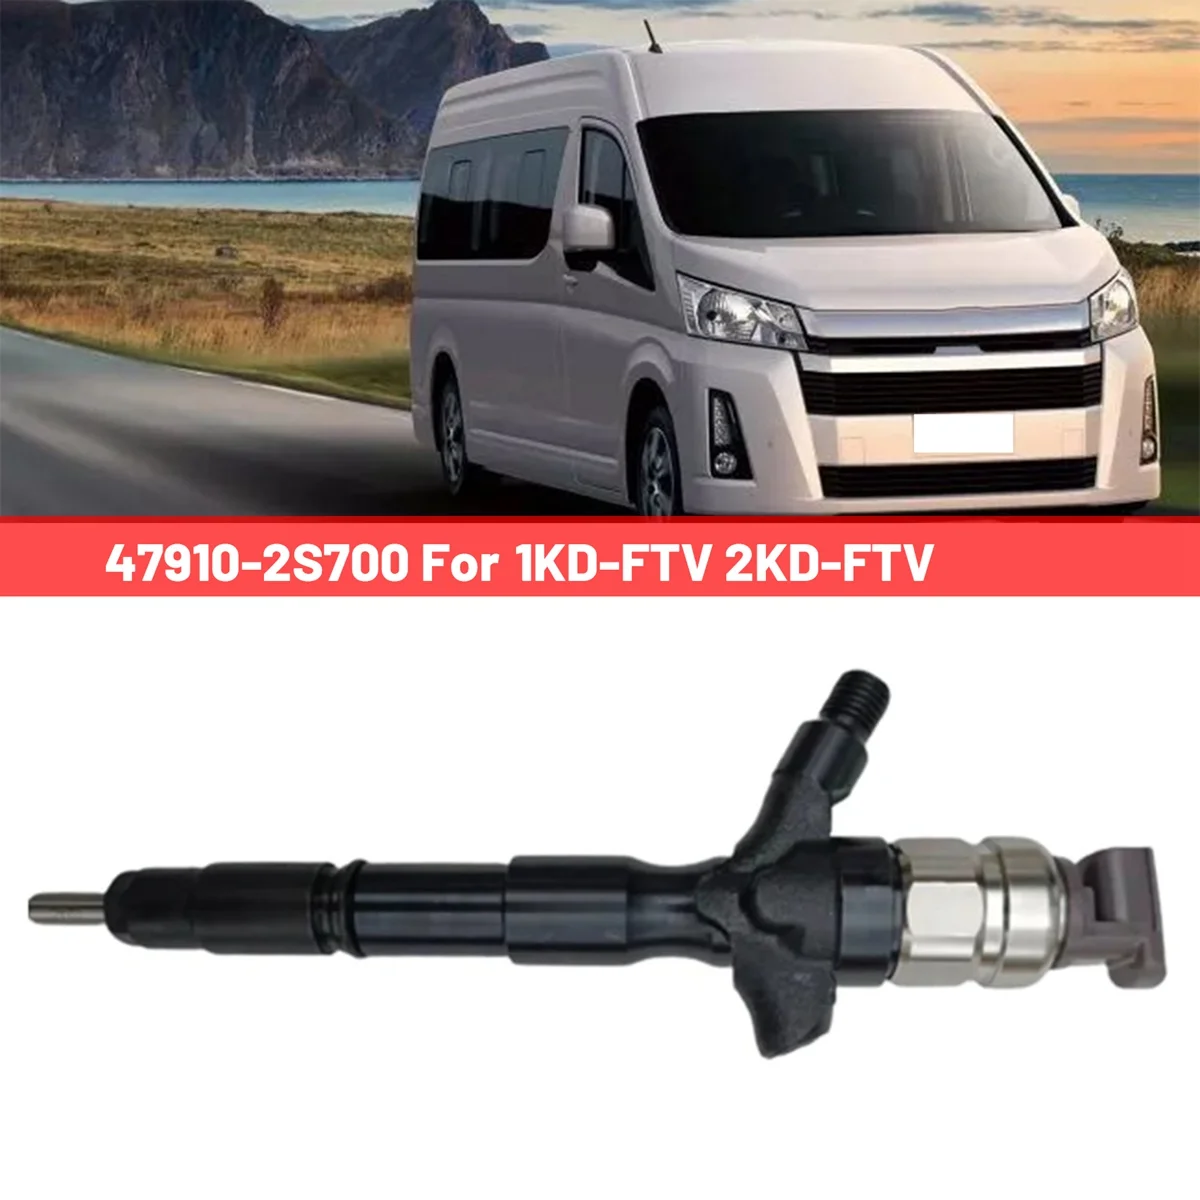 23670-09330 Diesel Injetor de Combustível de Trilho Comum Injetor de Automóvel para Toyota 1KD-FTV /2KD-FTV